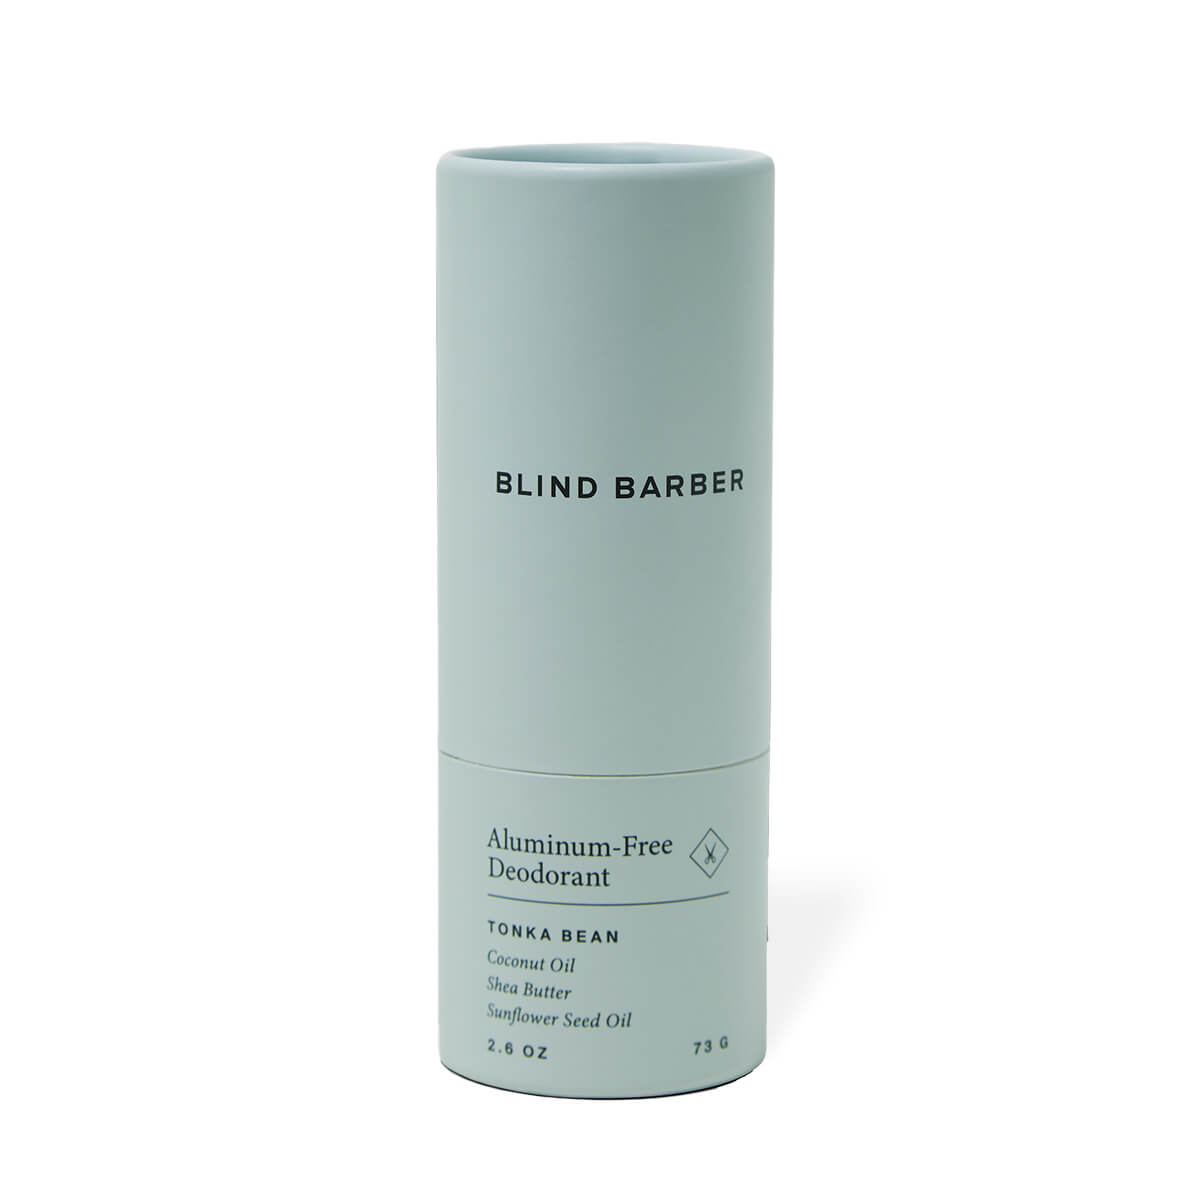 aluminum-free deodorant by Blind Barber